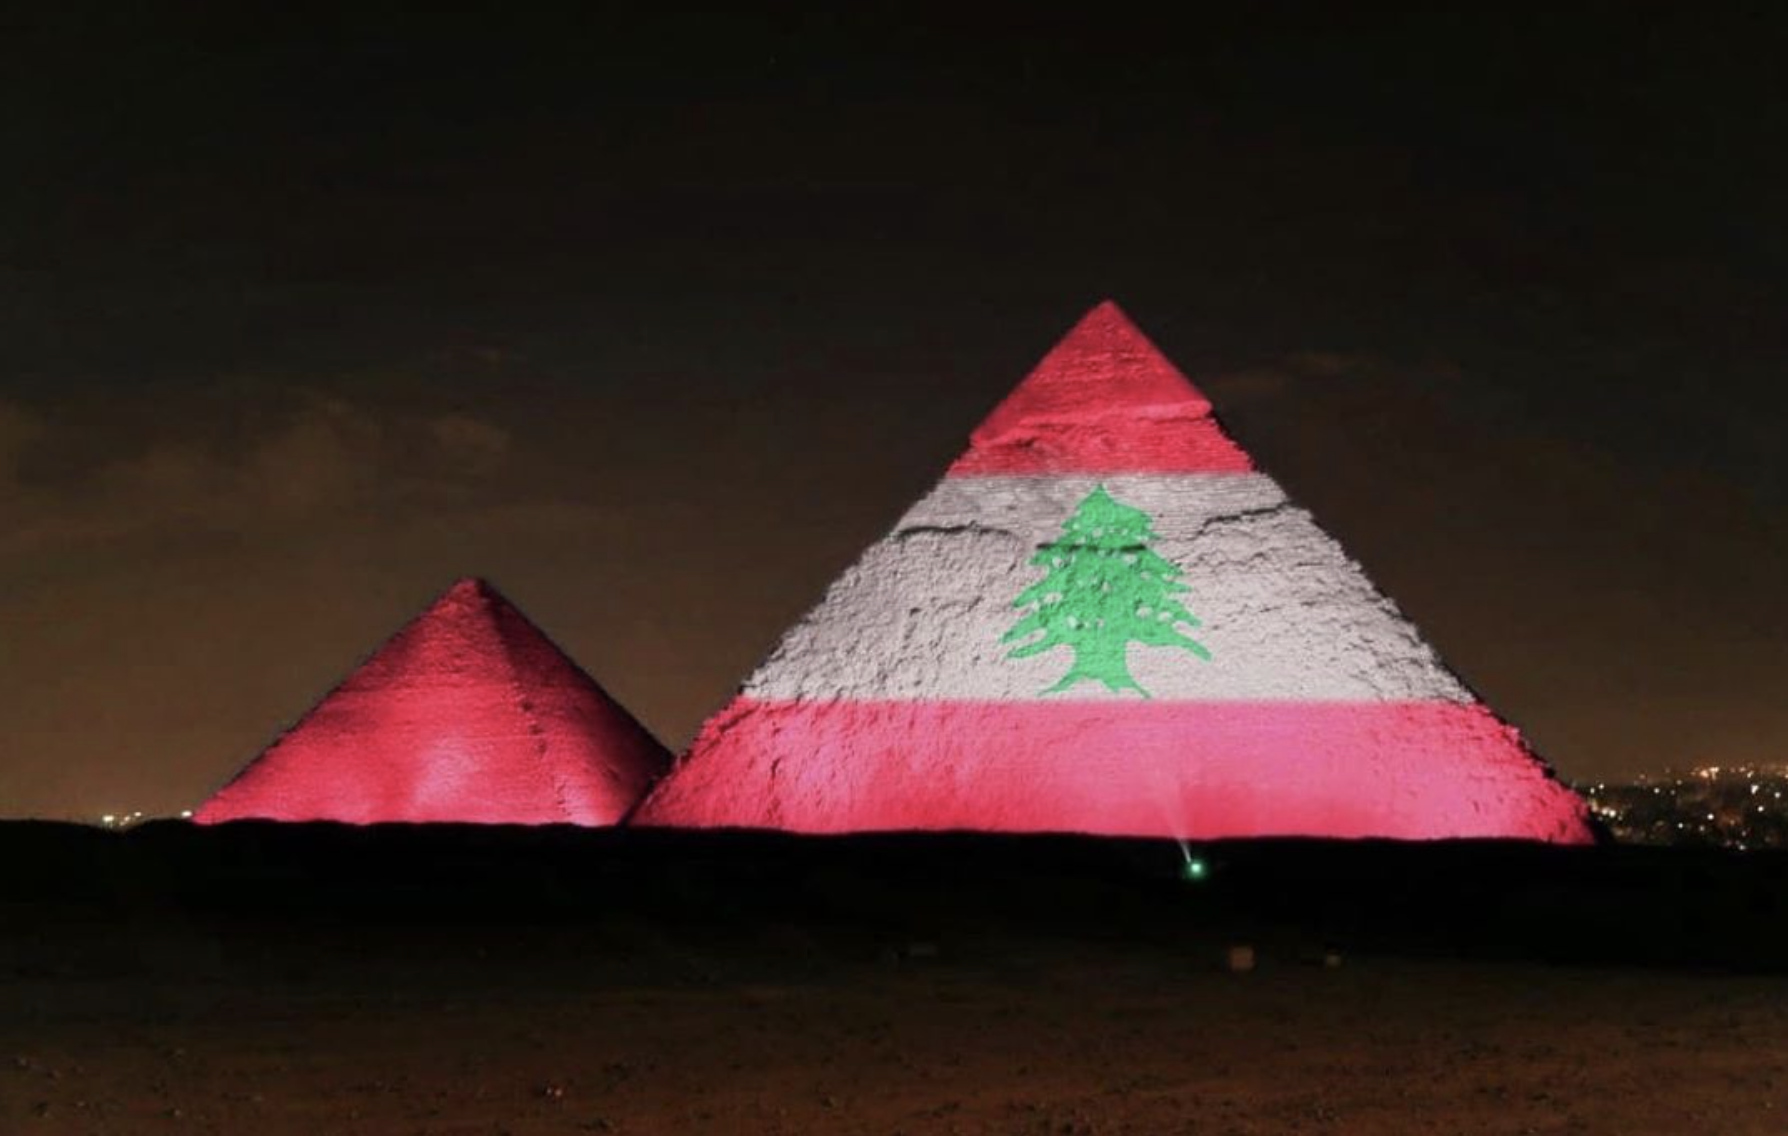  #Pixur | Η Αίγυπτος και το #Dubai φωτίστηκαν με τη σημαία του Λιβάνου ως μήνυμα συμπαράστασης